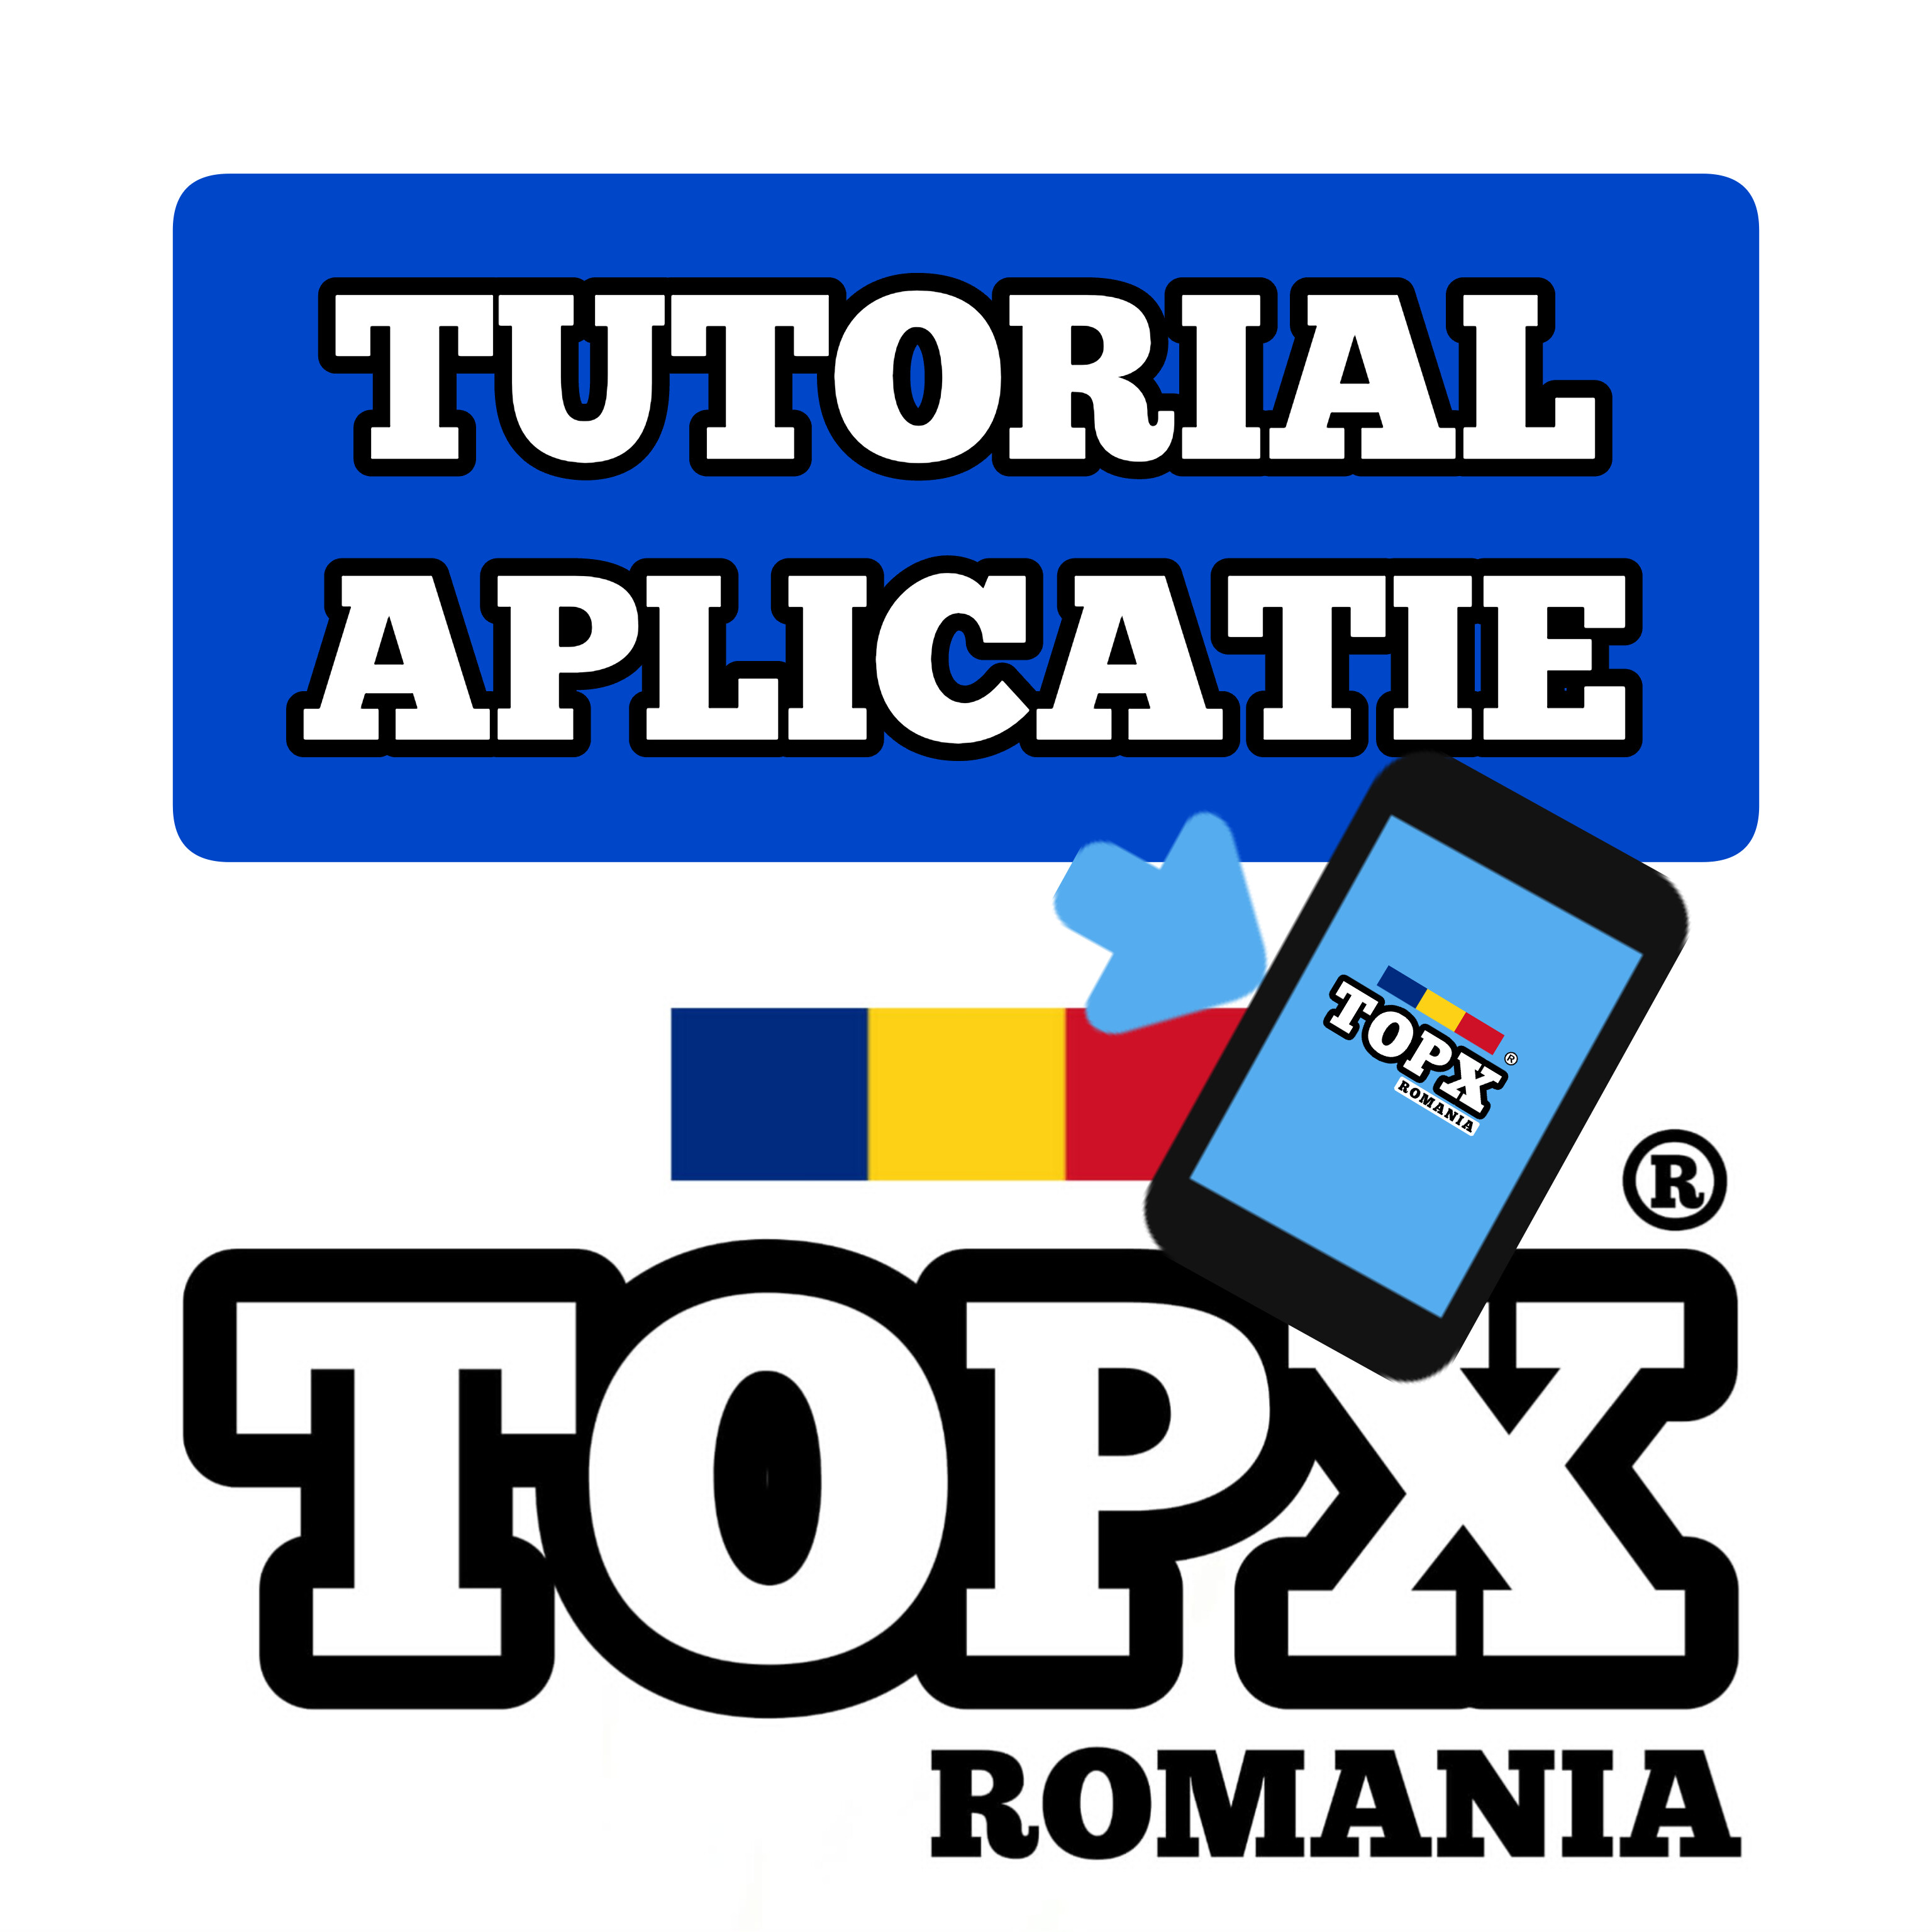 APLICATIA TOPX ROMANIA PE TELEFONUL MOBIL - TUTORIAL VIDEO